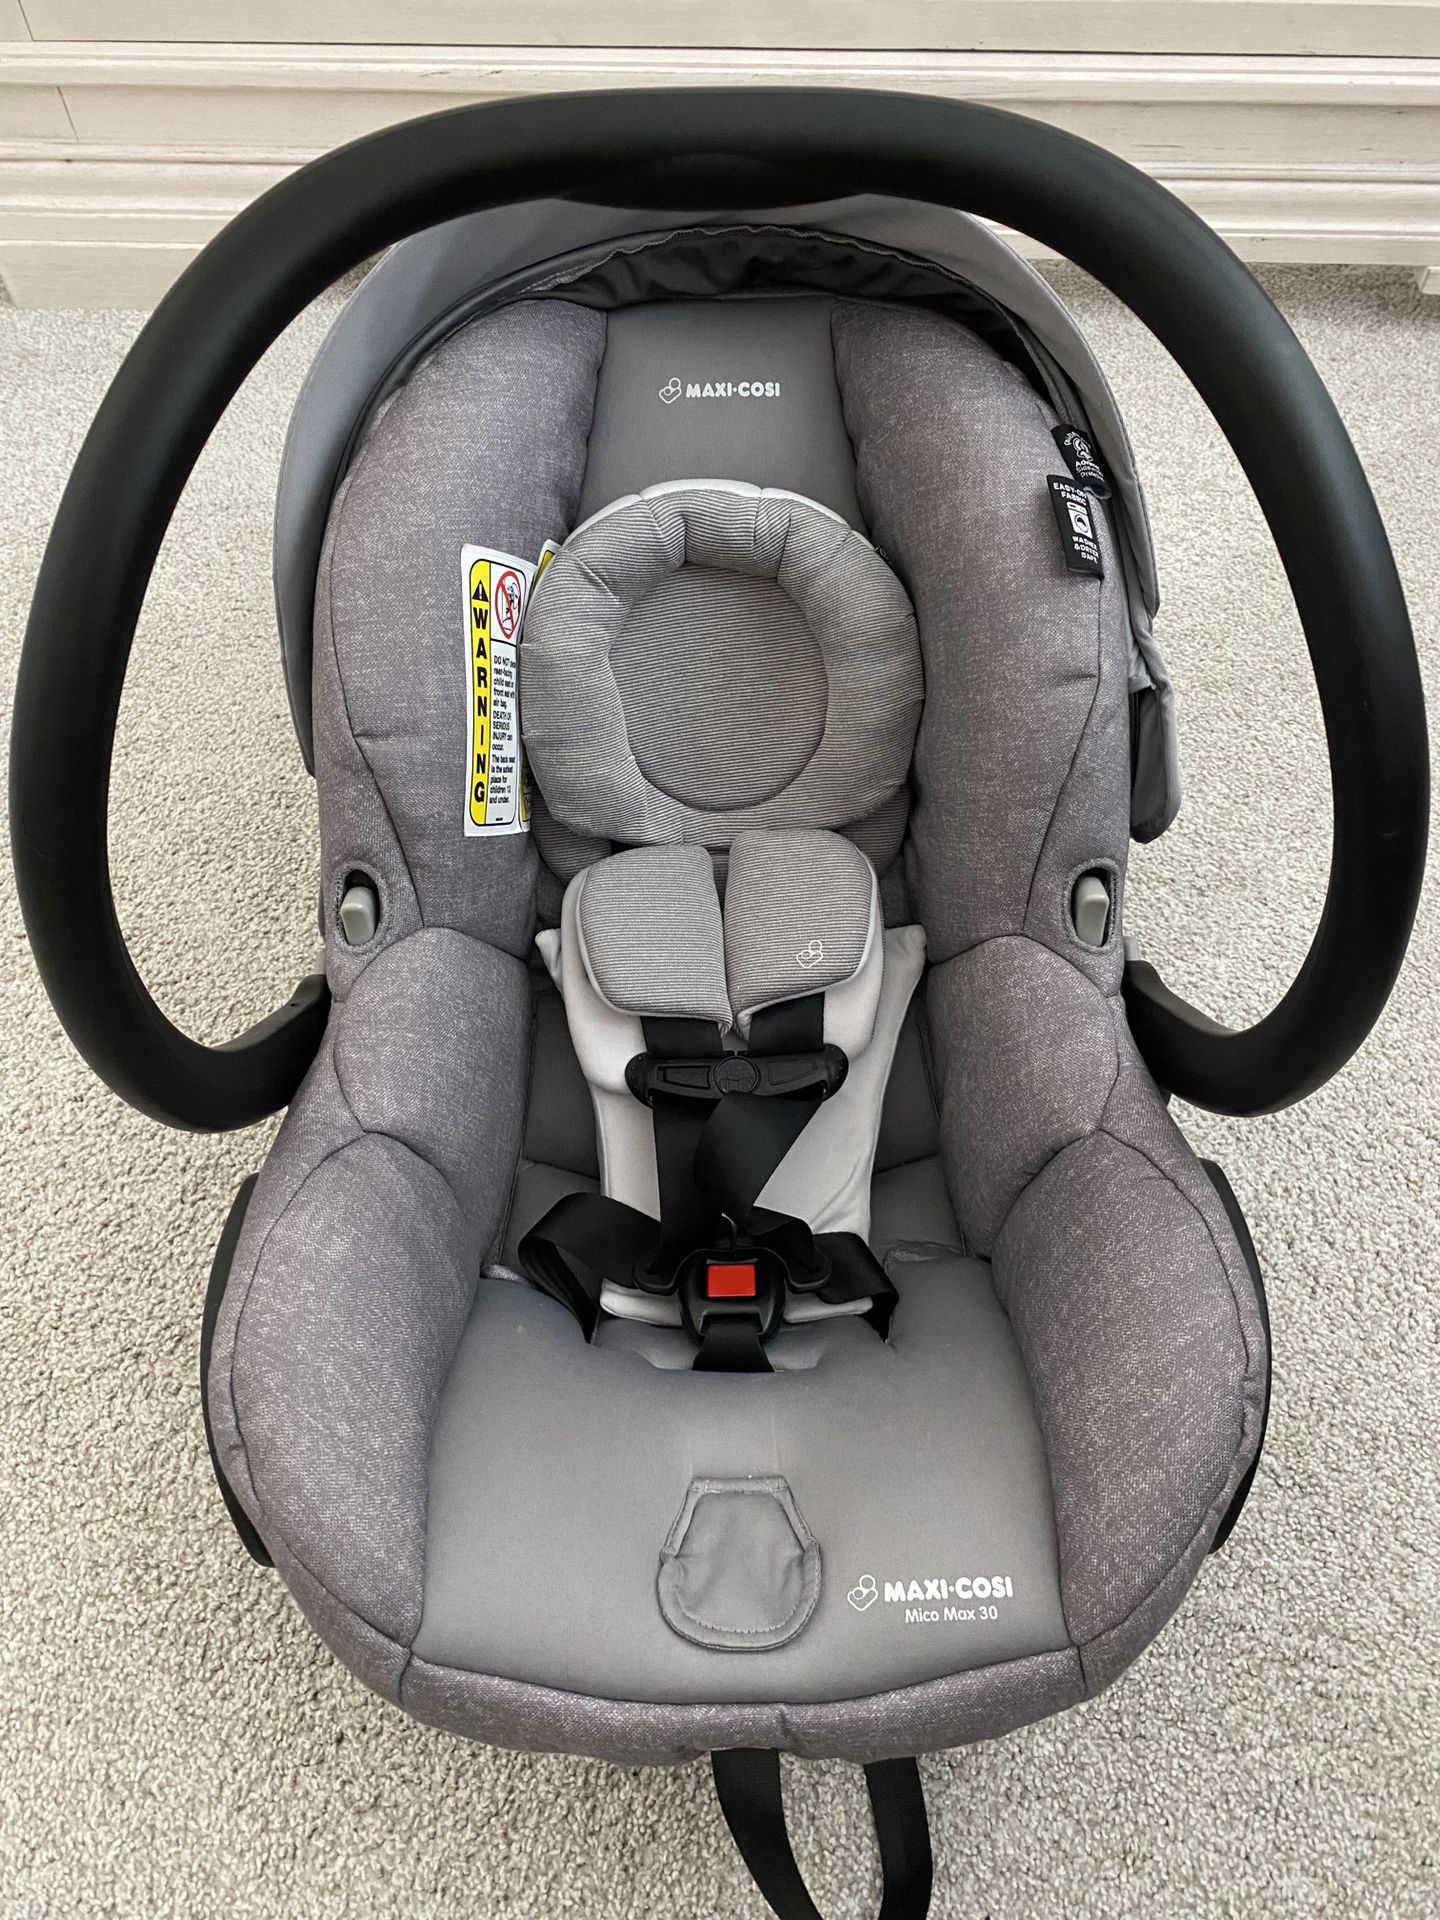 Maxi Cosi Mico 30 Infant Car Seat